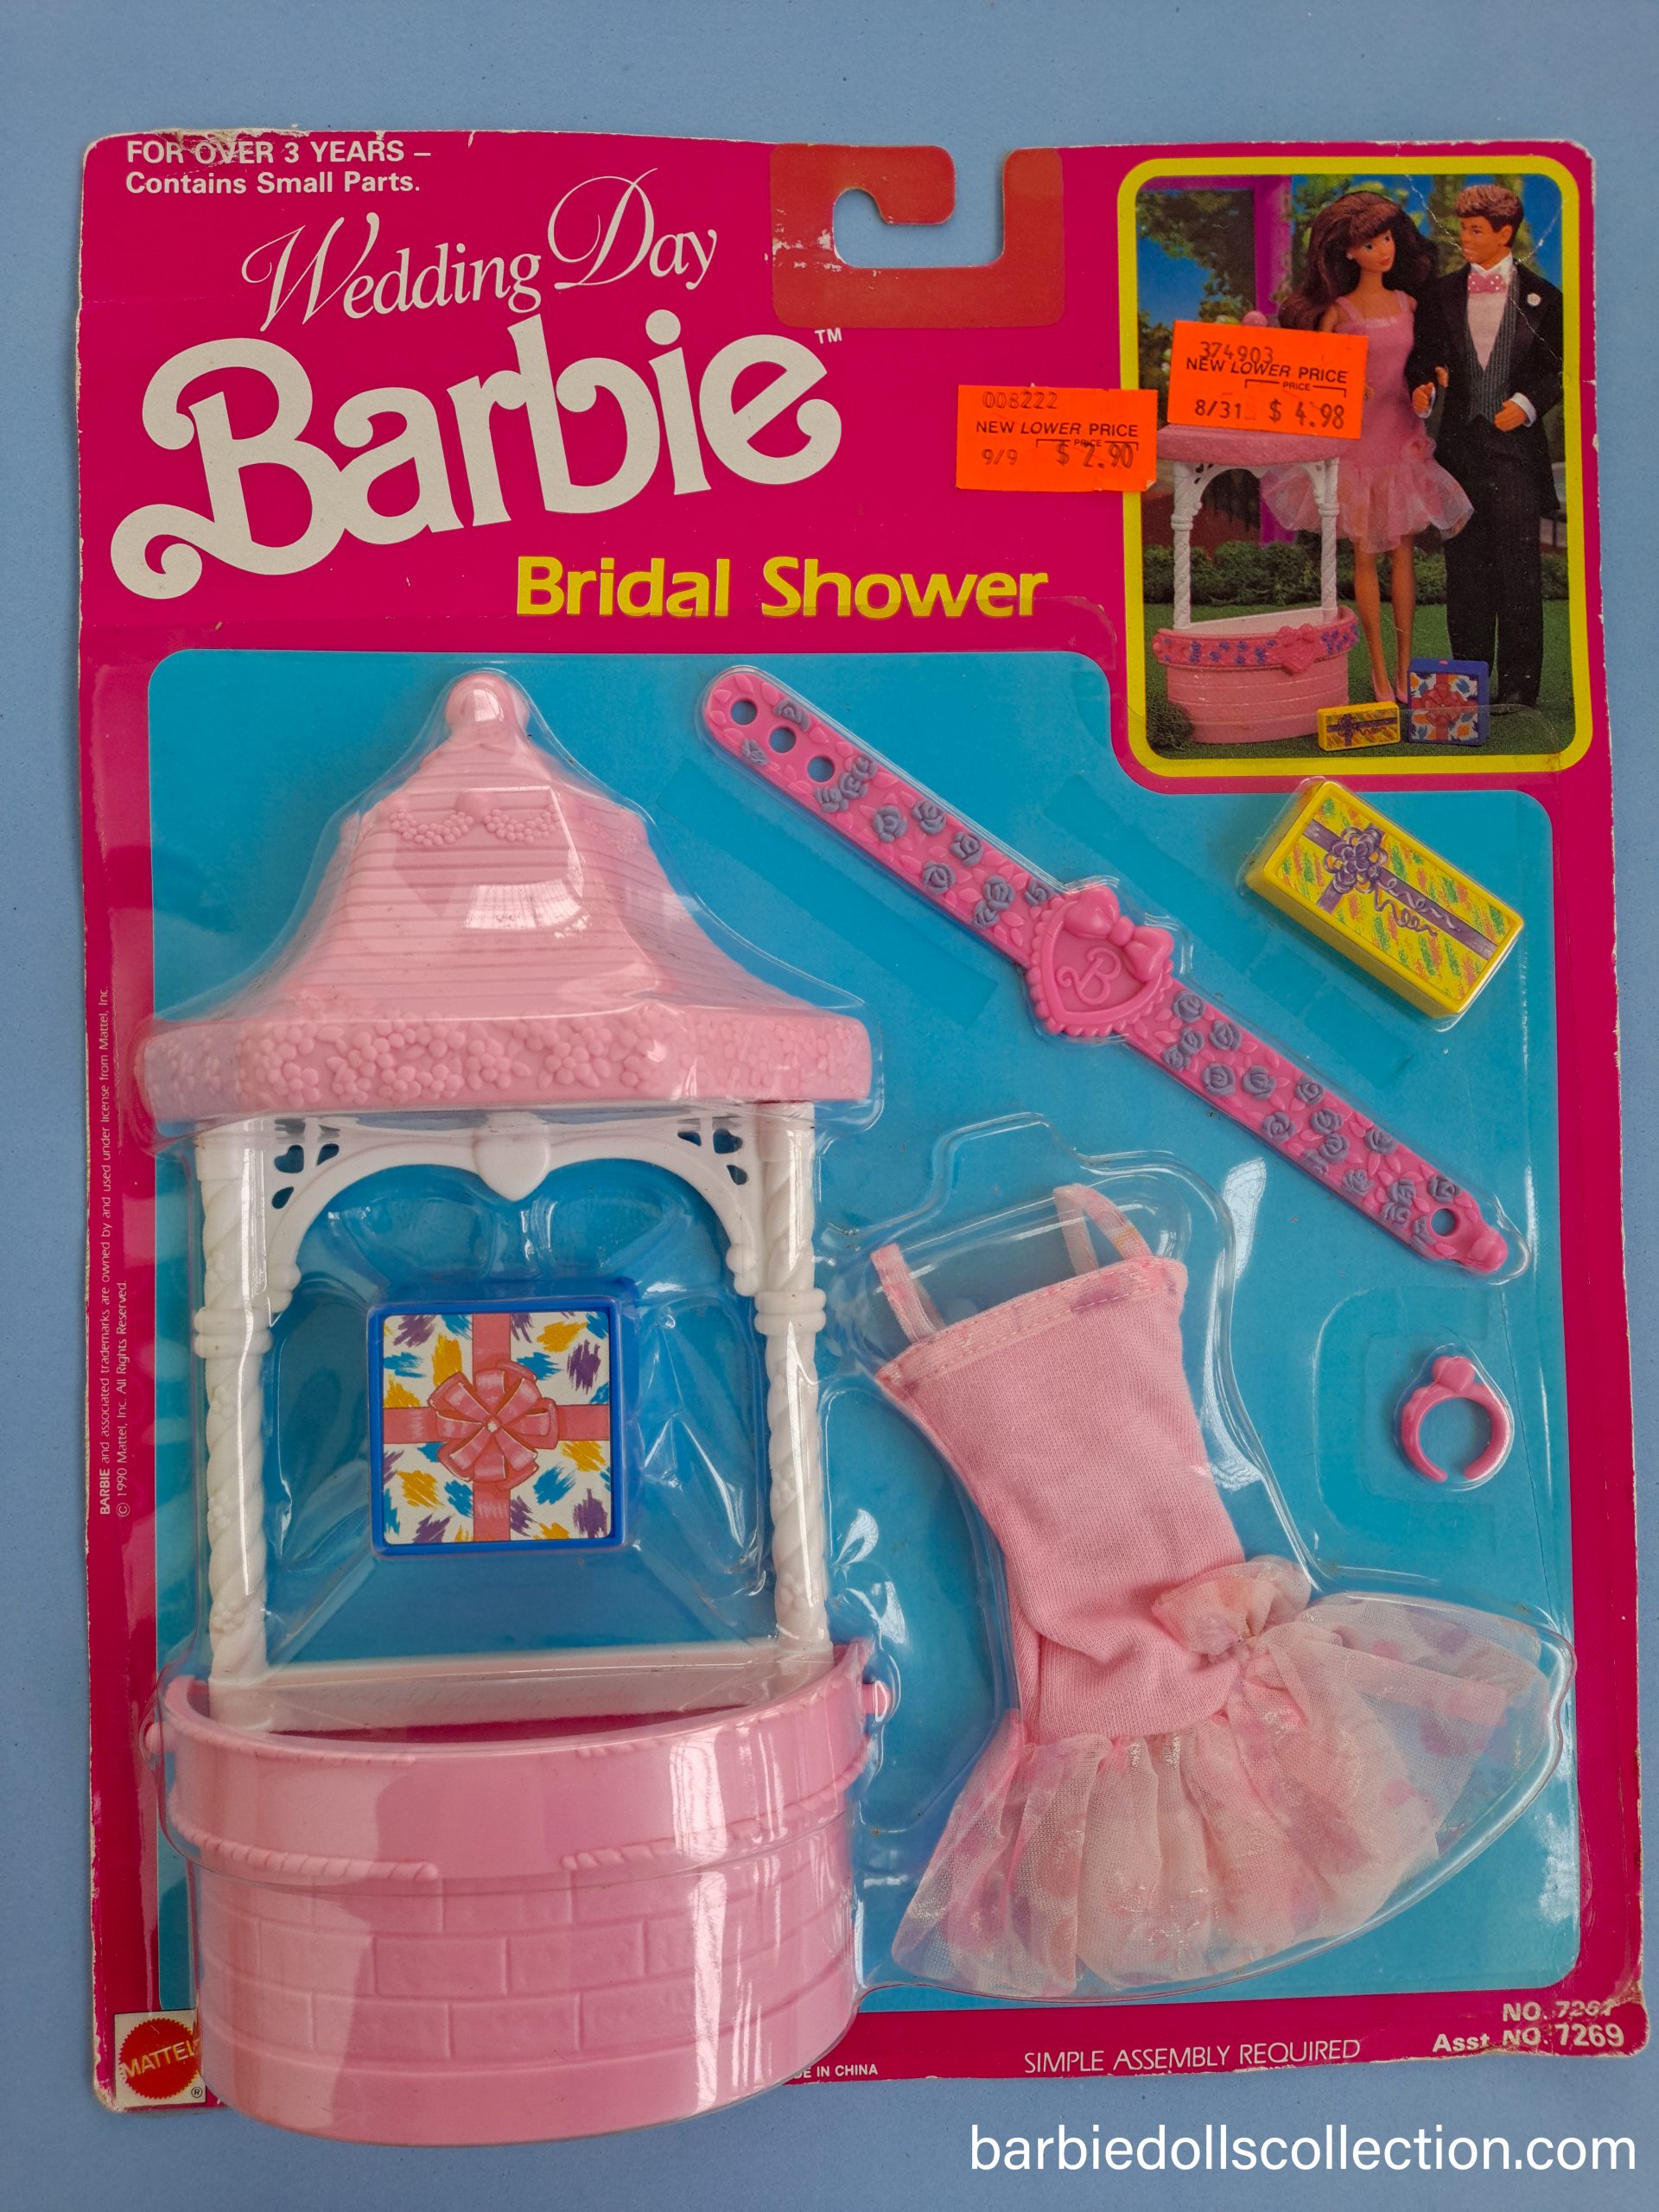 Wedding Day Barbie Bridal Shower 1990